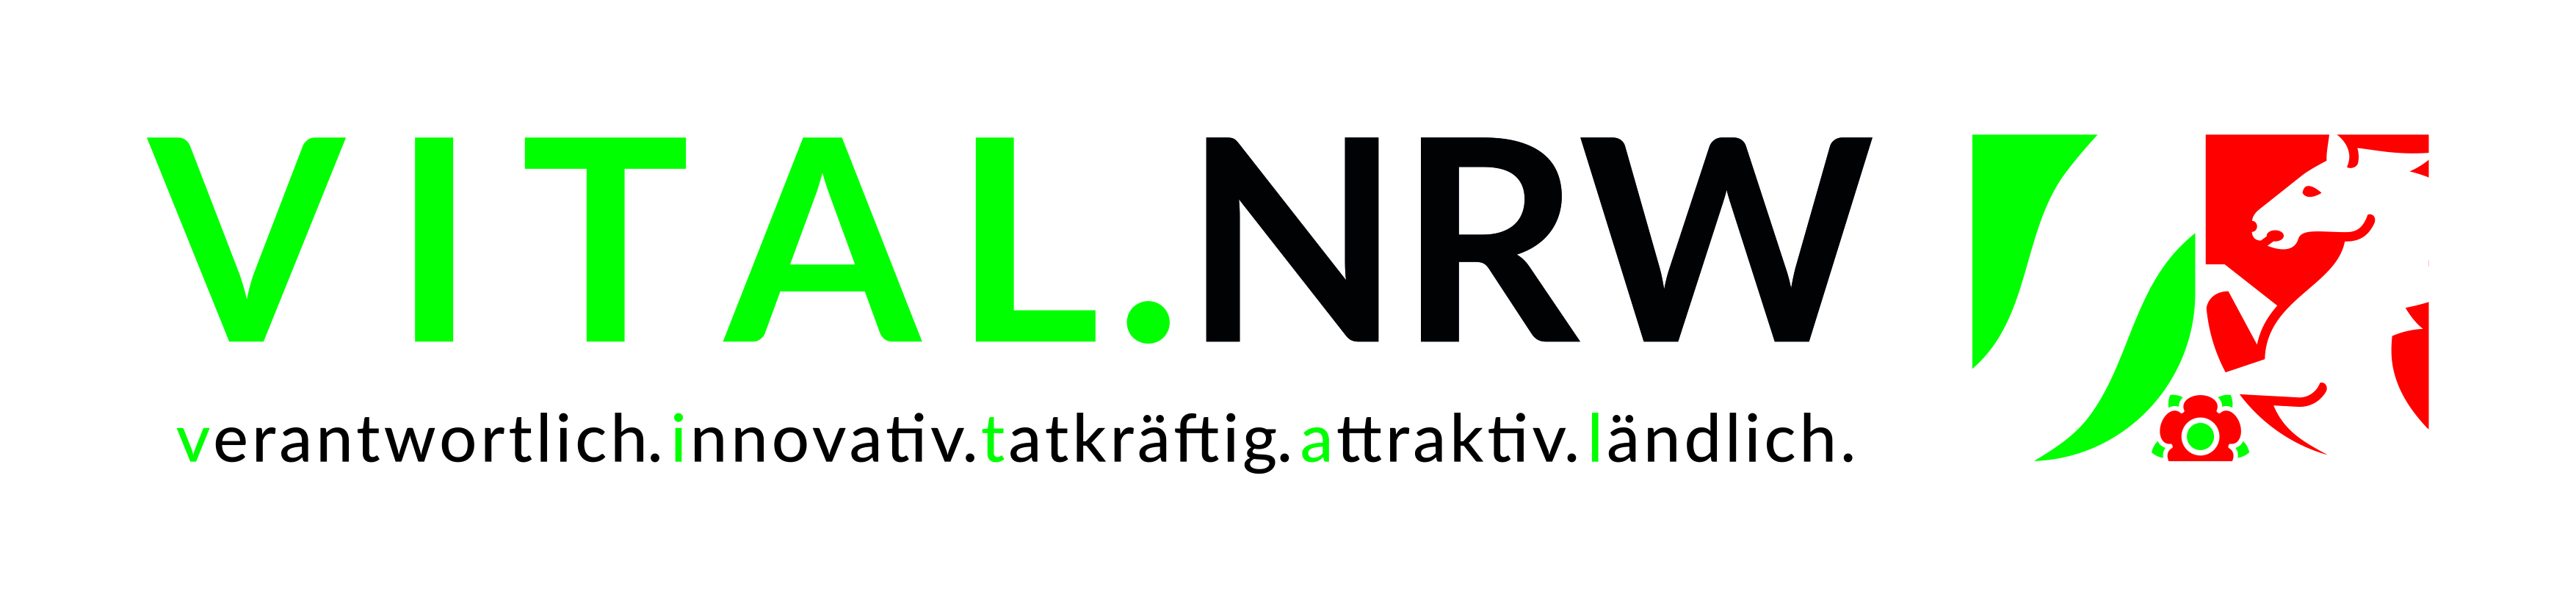 VITAL.NRW Projekte